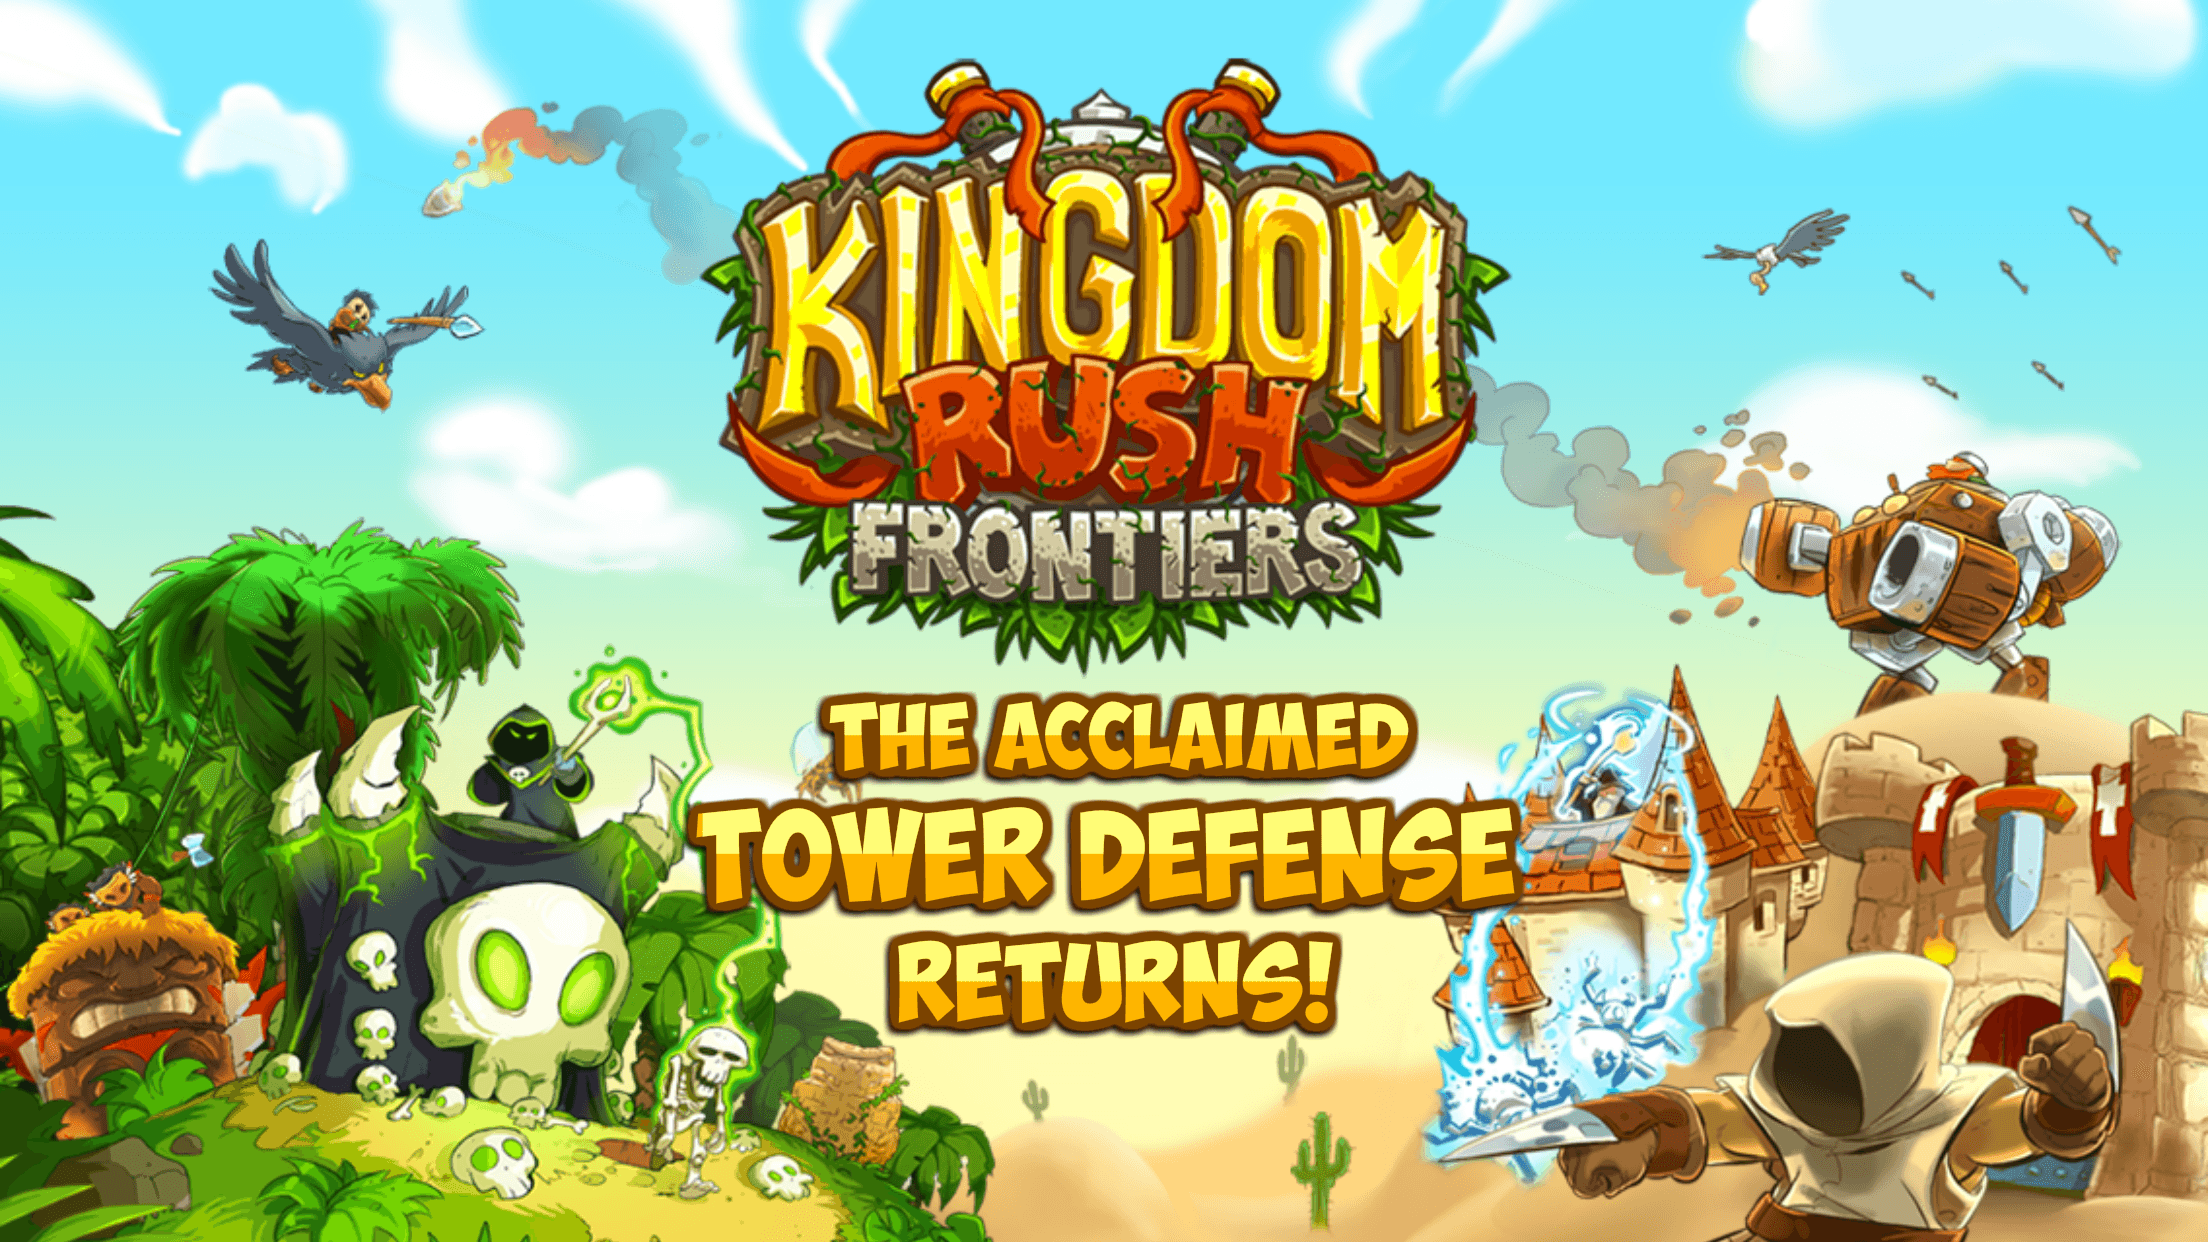 Free download game kingdom rush origins for pc